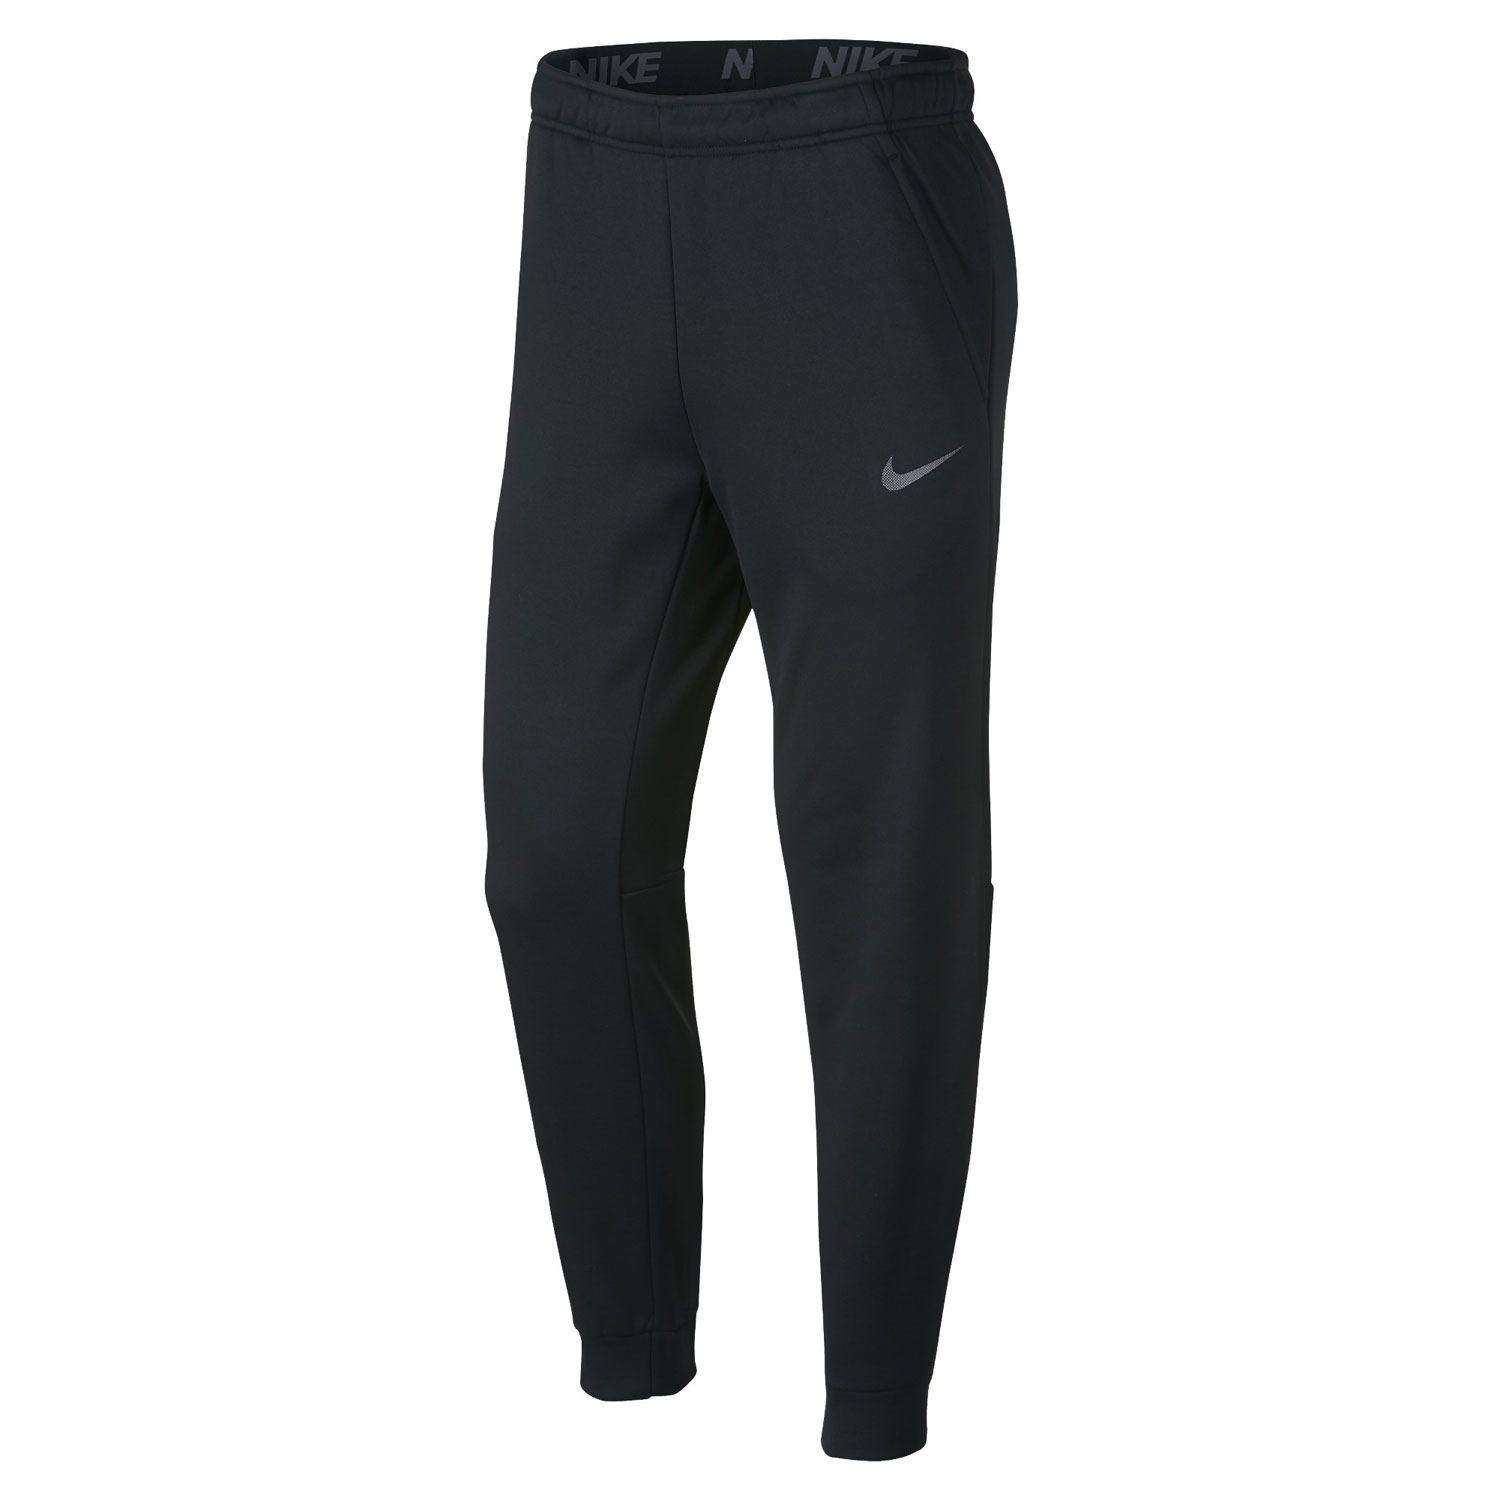 Nike Therma Pantaloni Training Uomo - Black